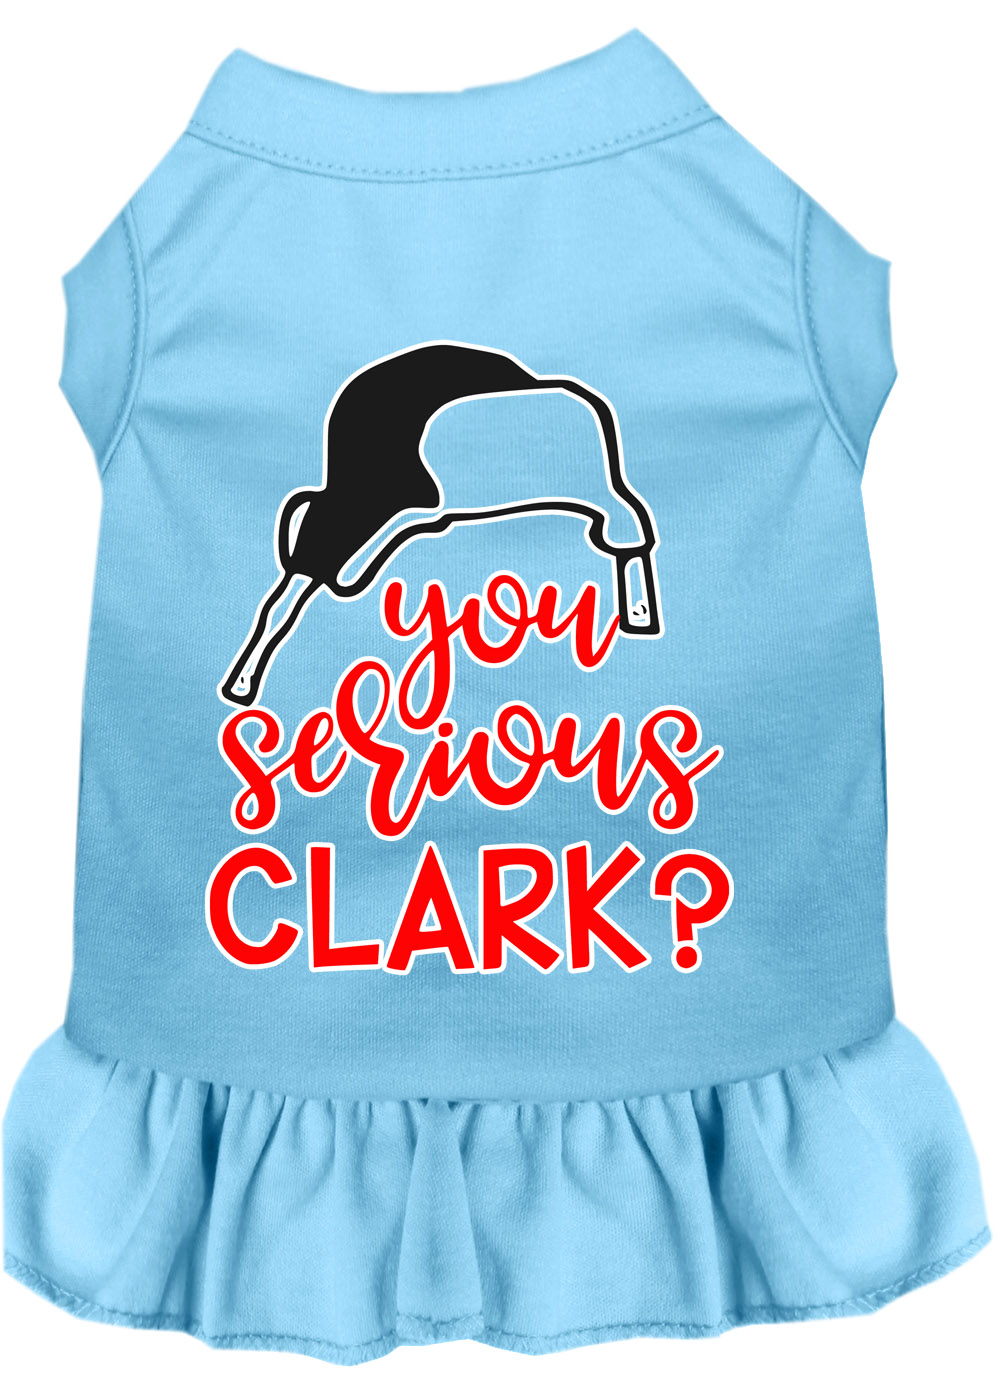 You Serious Clark? Screen Print Dog Dress Baby Blue Lg